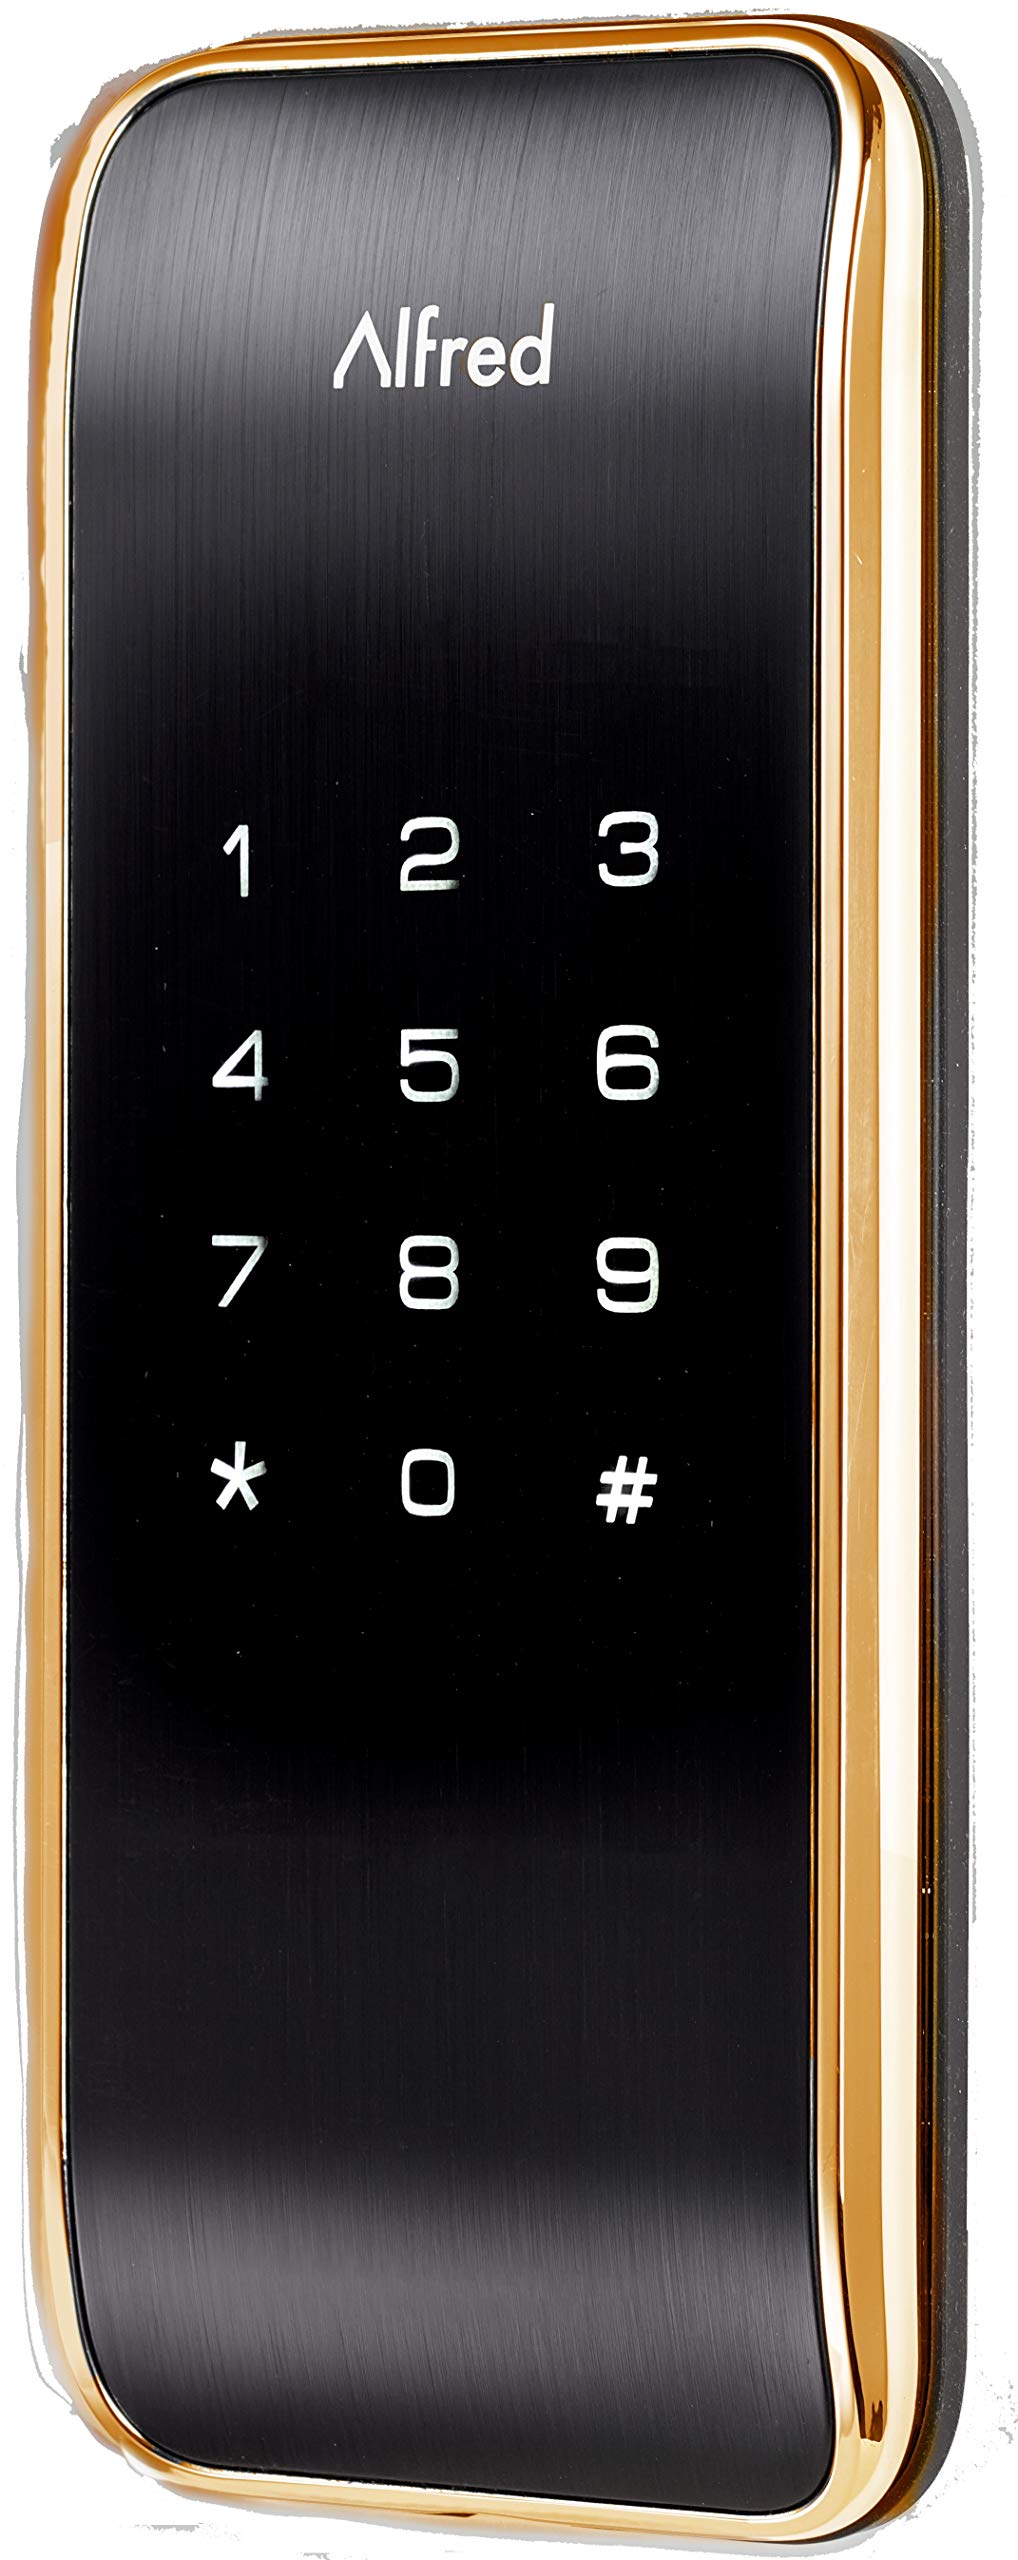 Alfred DB2 Smart Door Lock Deadbolt Touchscreen Keypad, Pin Code + Bluetooth, Up to 20 Pin Codes (Gold)